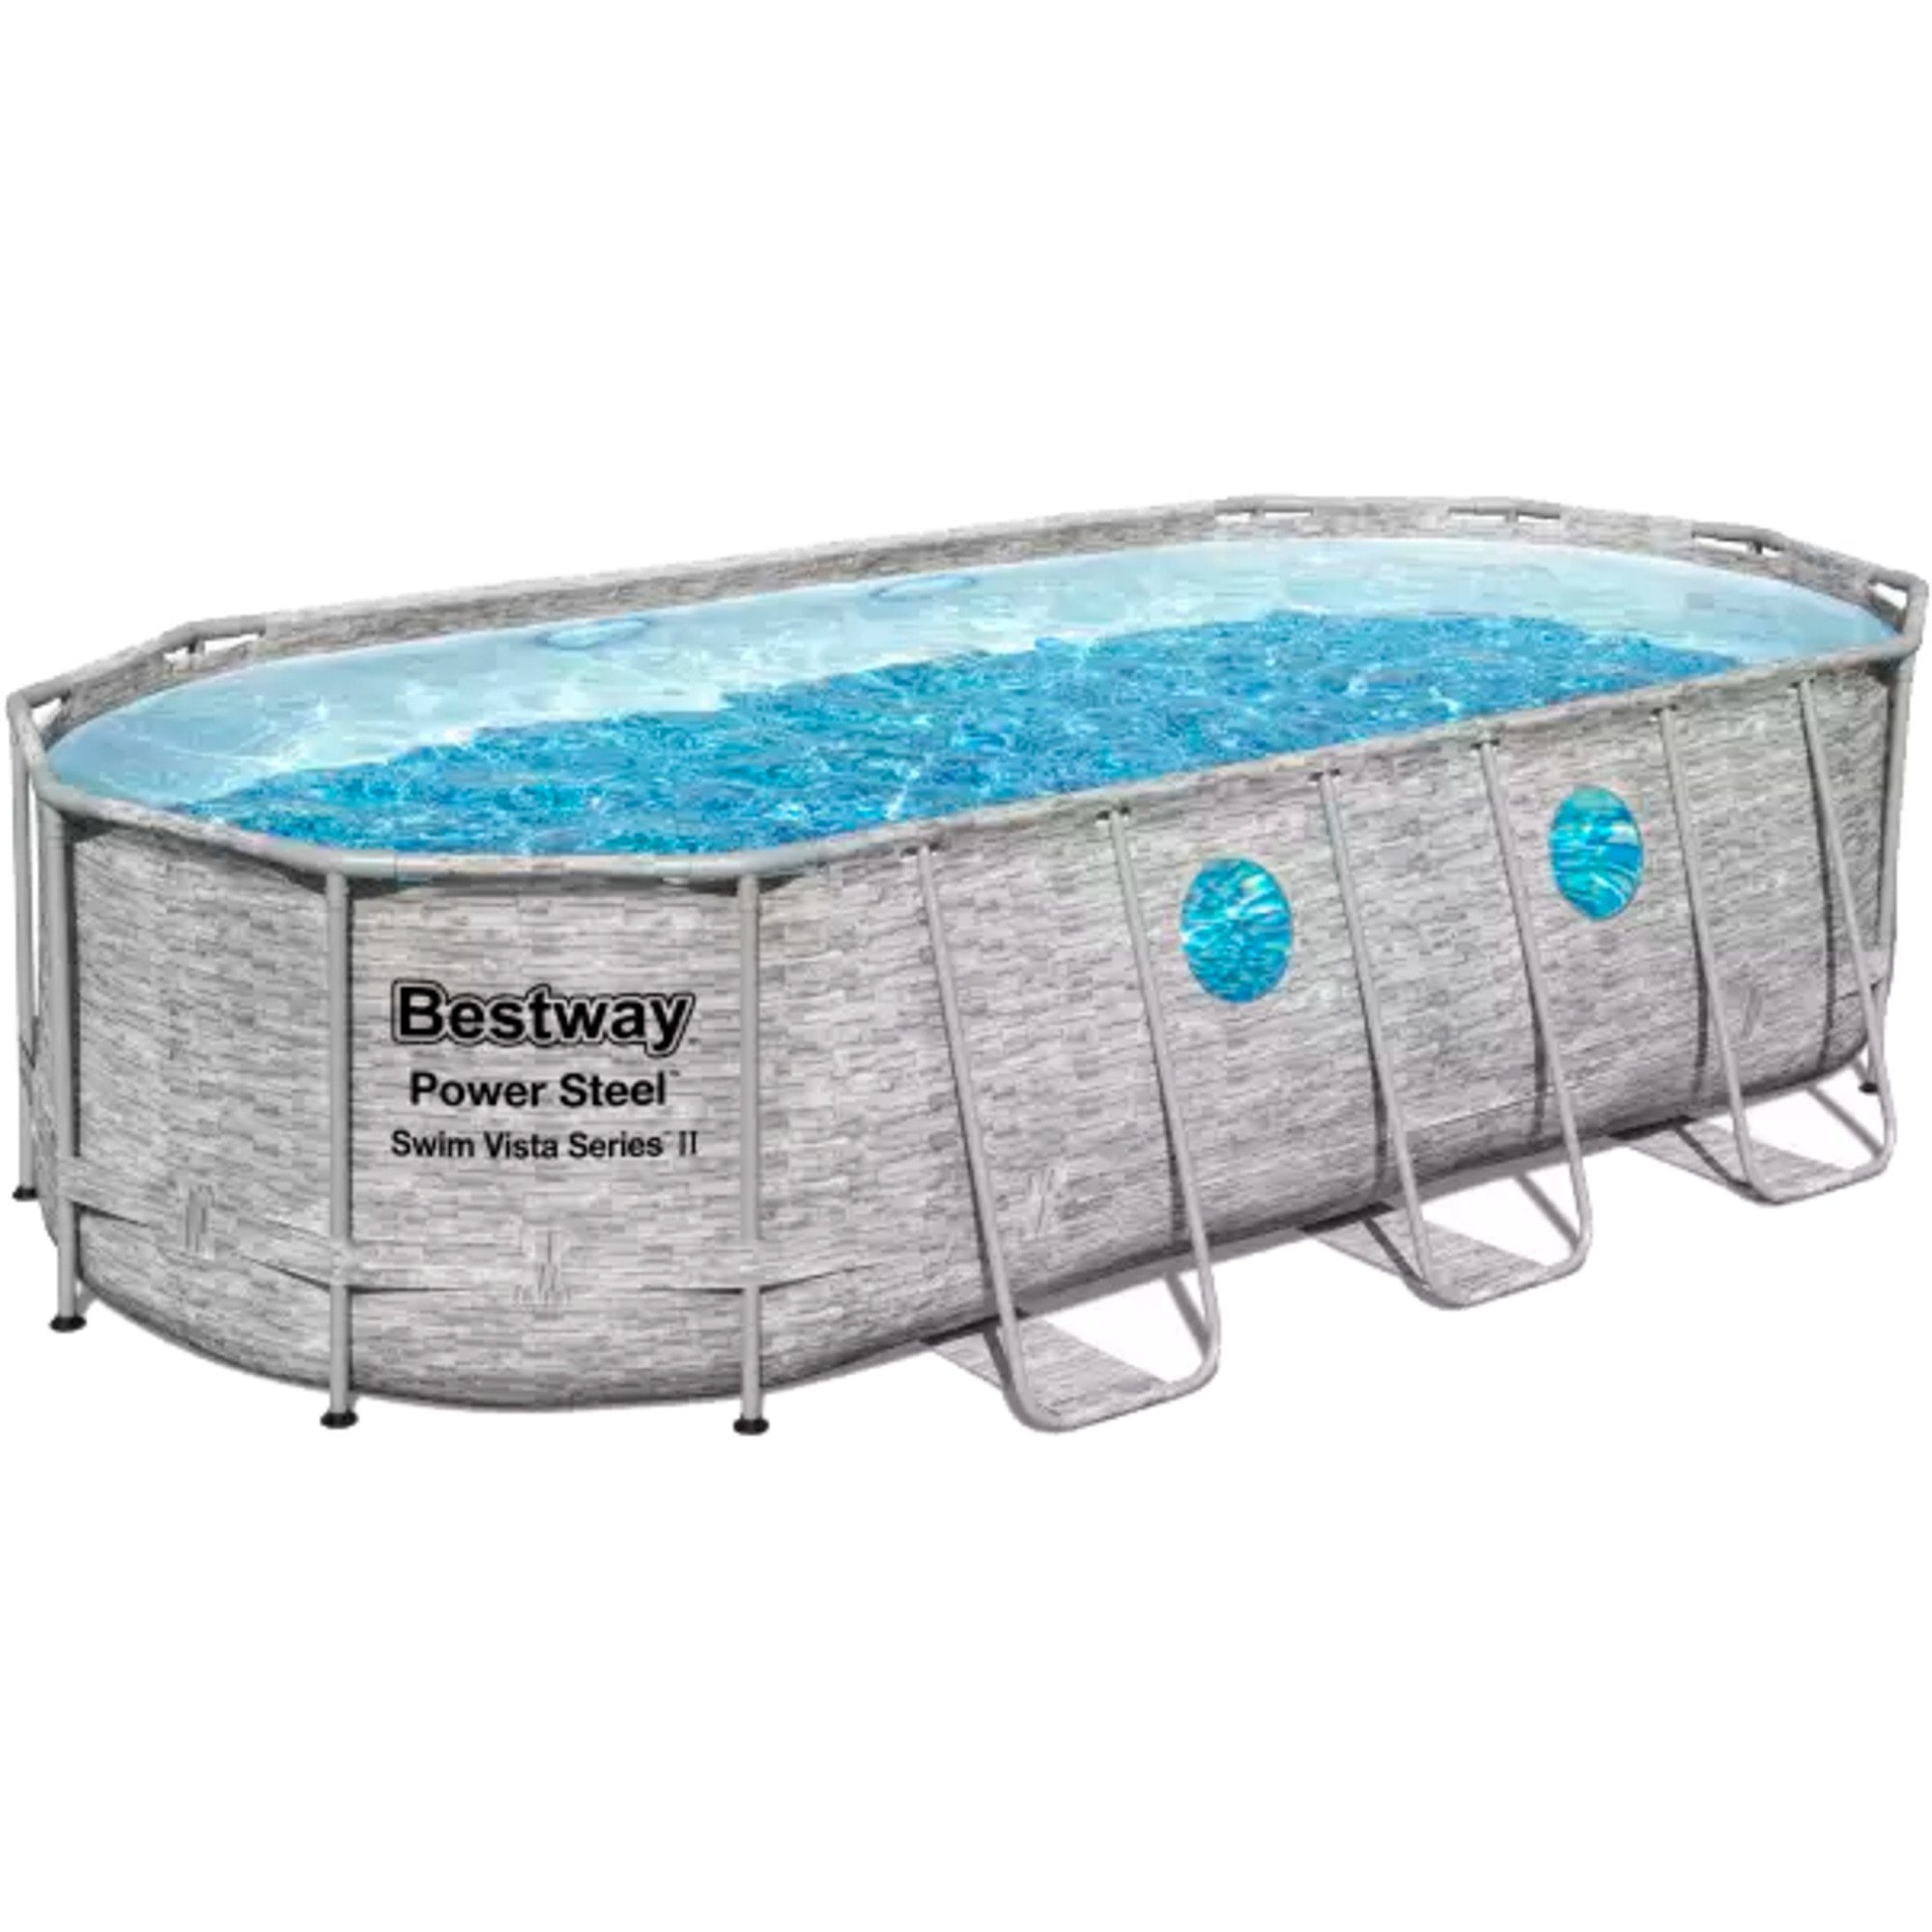 Bestway Pool Power Steel Swim Vista Oval Frame Pool-Set, 549 x 274 x 122cm